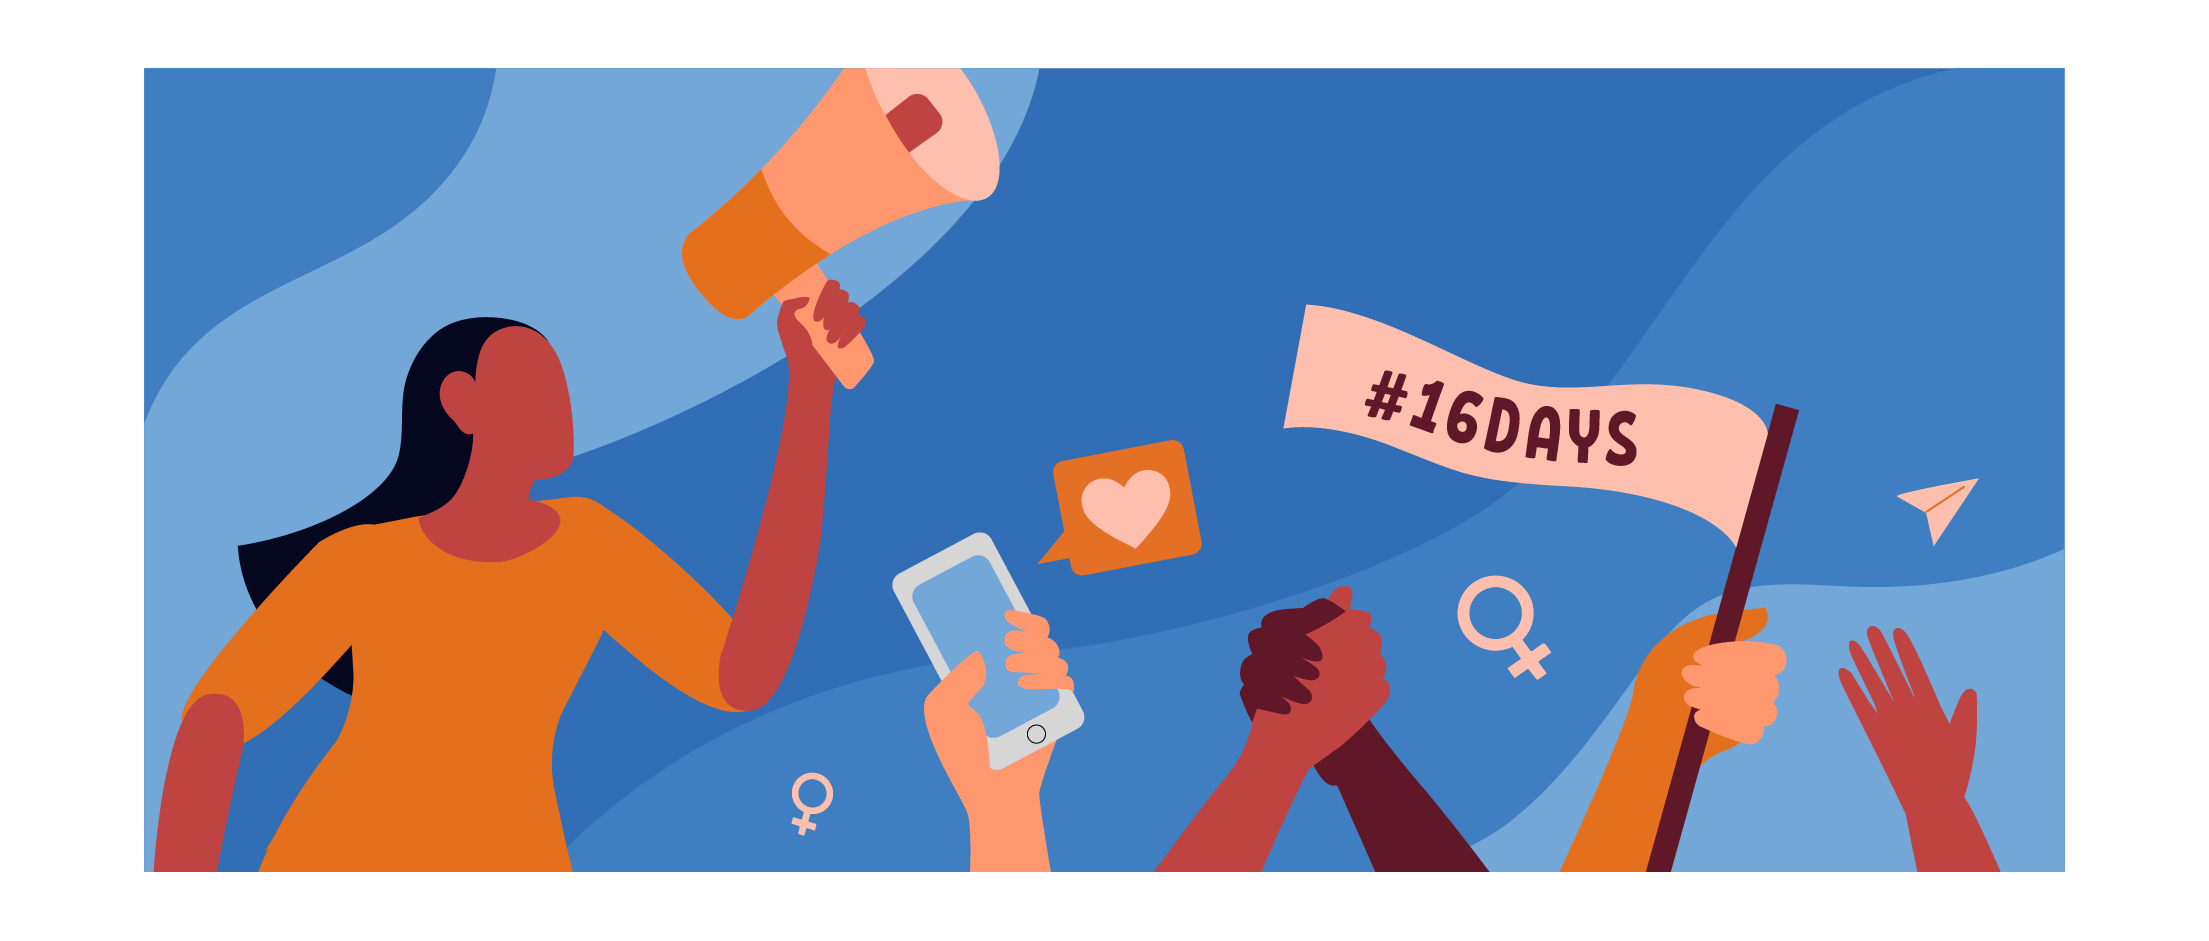 Reflections on the 16 Days of Activism Against Gender-Based Violence